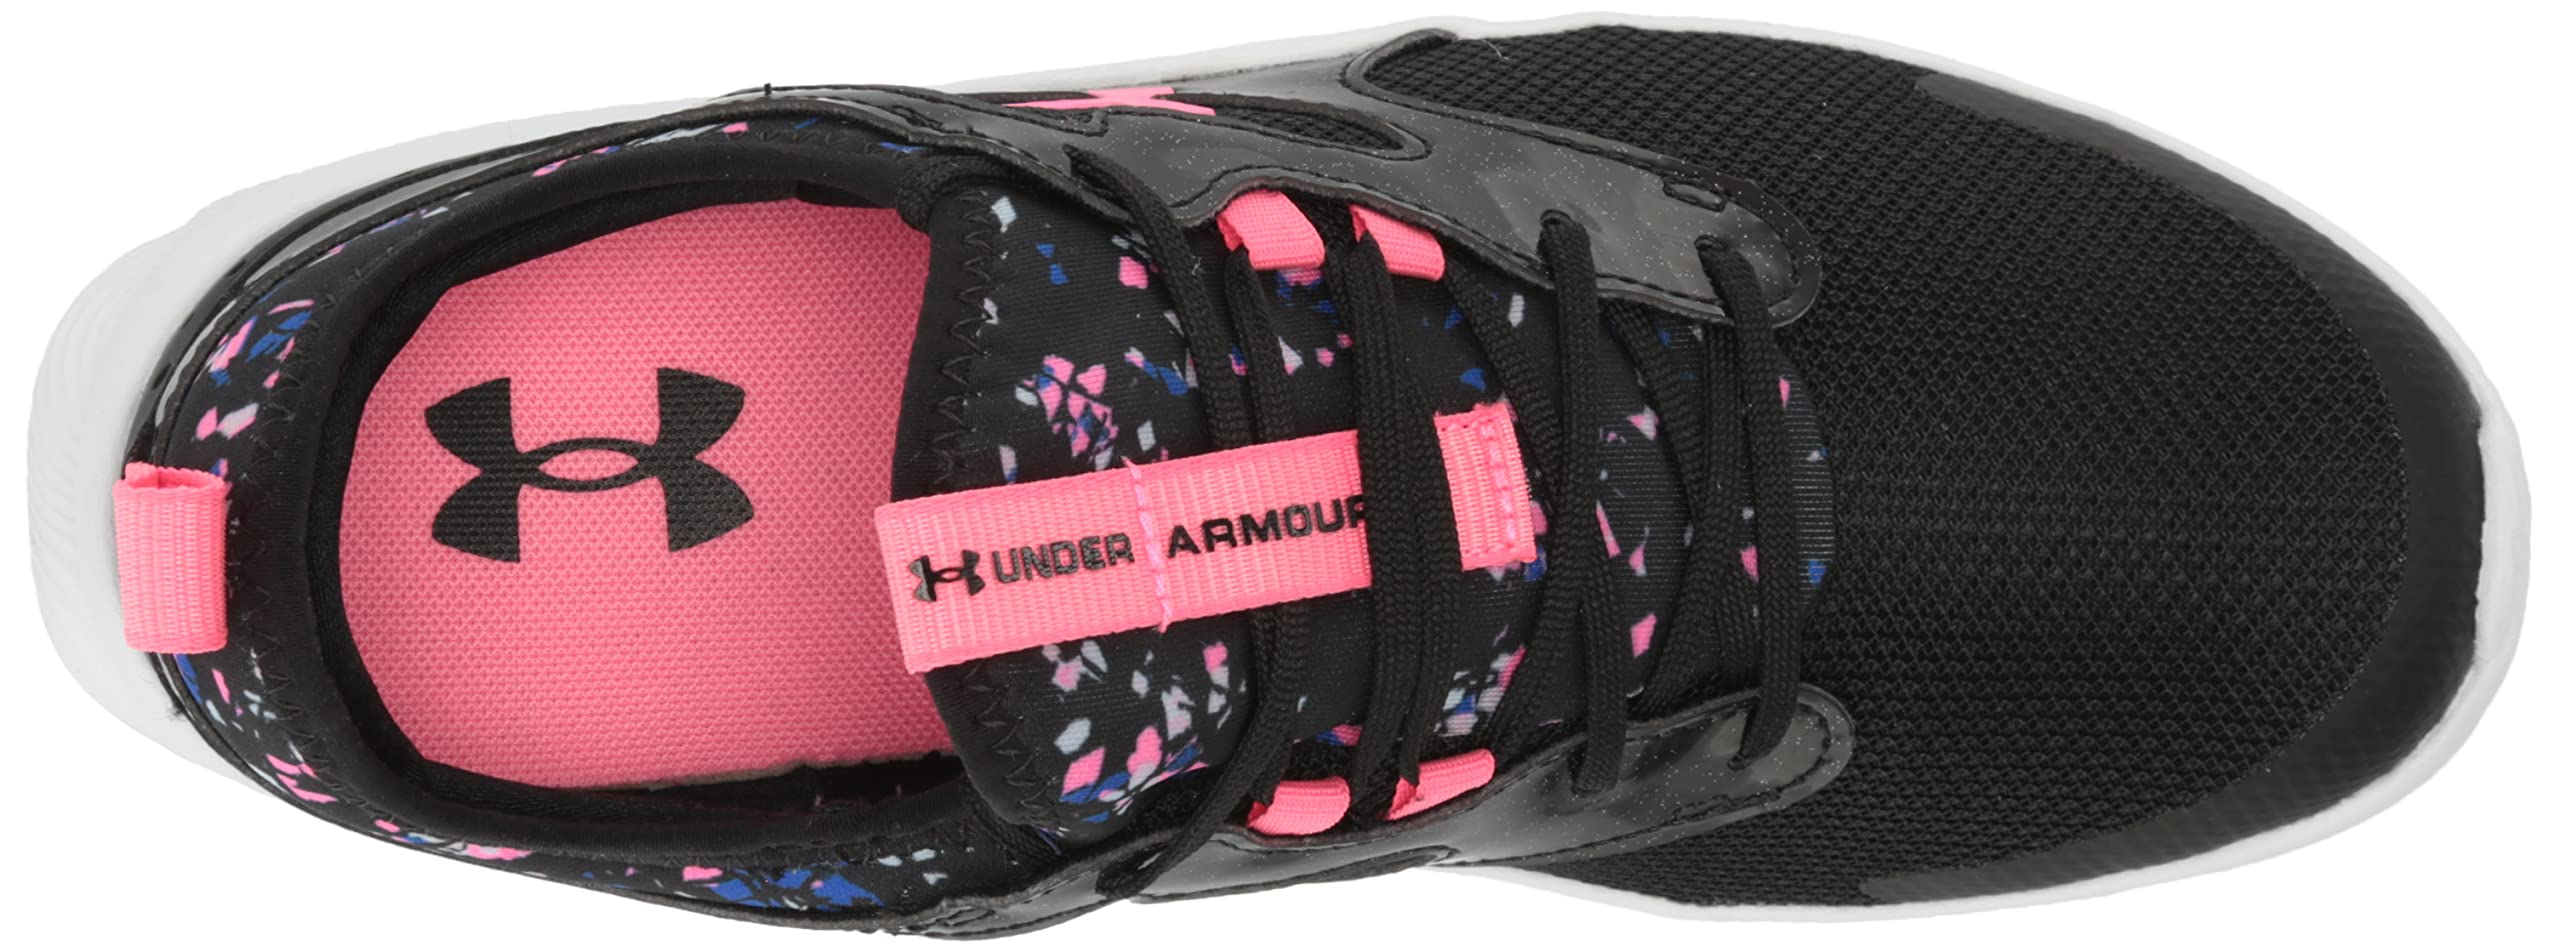 Under Armour Unisex-Child Grade School Infinity 2.0 Print Running Shoe